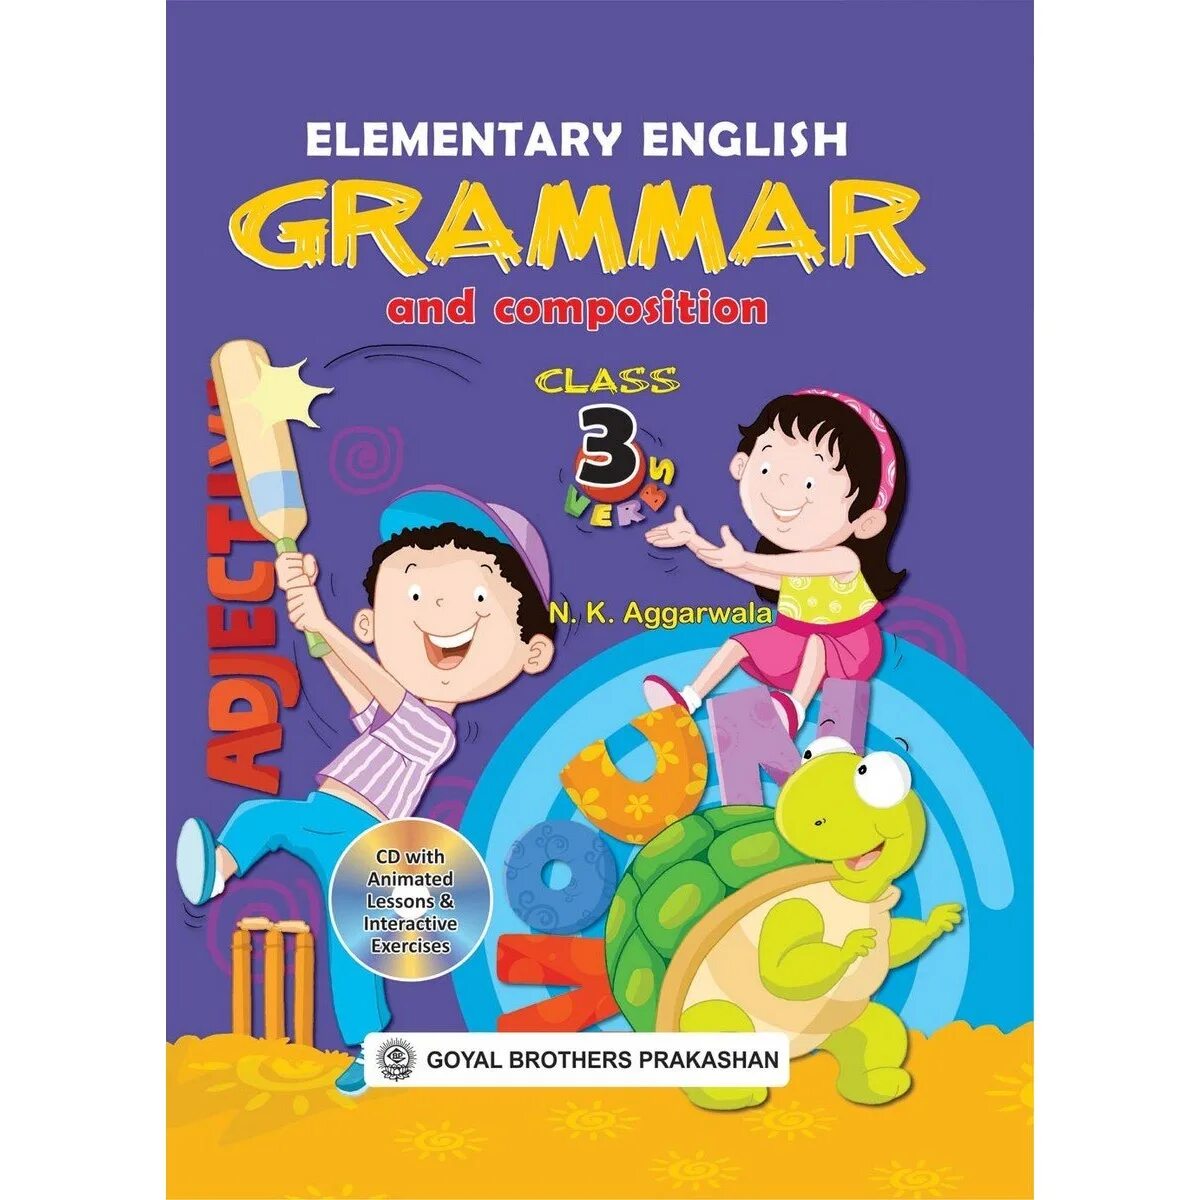 Elementary english video. Elementary English Grammar. Книги English Elementary. Popular Grammar and Composition. Grammar book 3 класс.